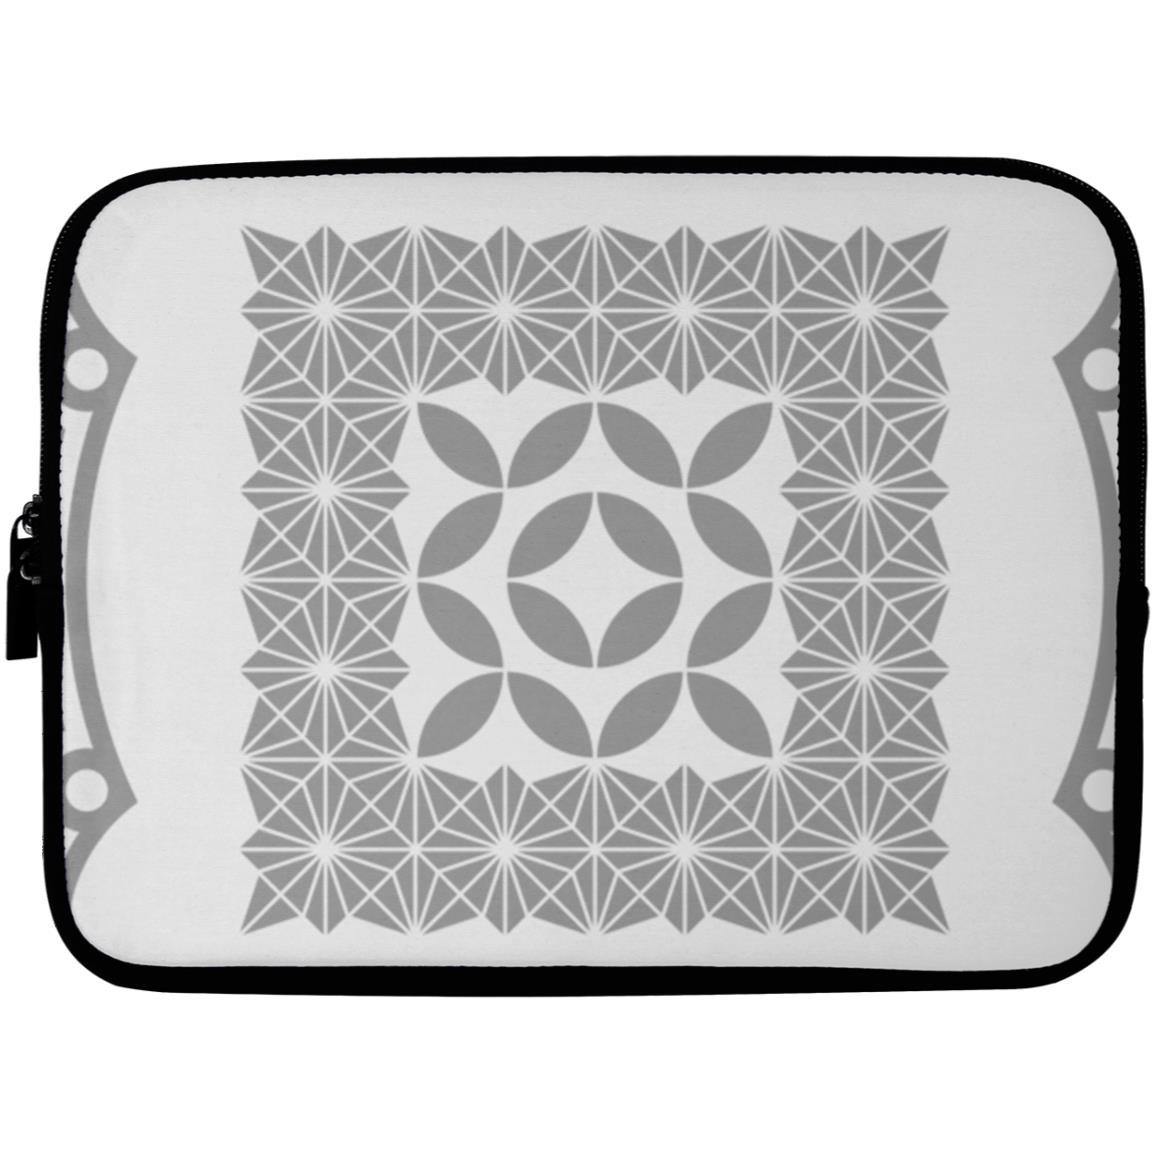 Crop Circle Laptop Sleeve - Morgan´s Hill - Shapes of Wisdom